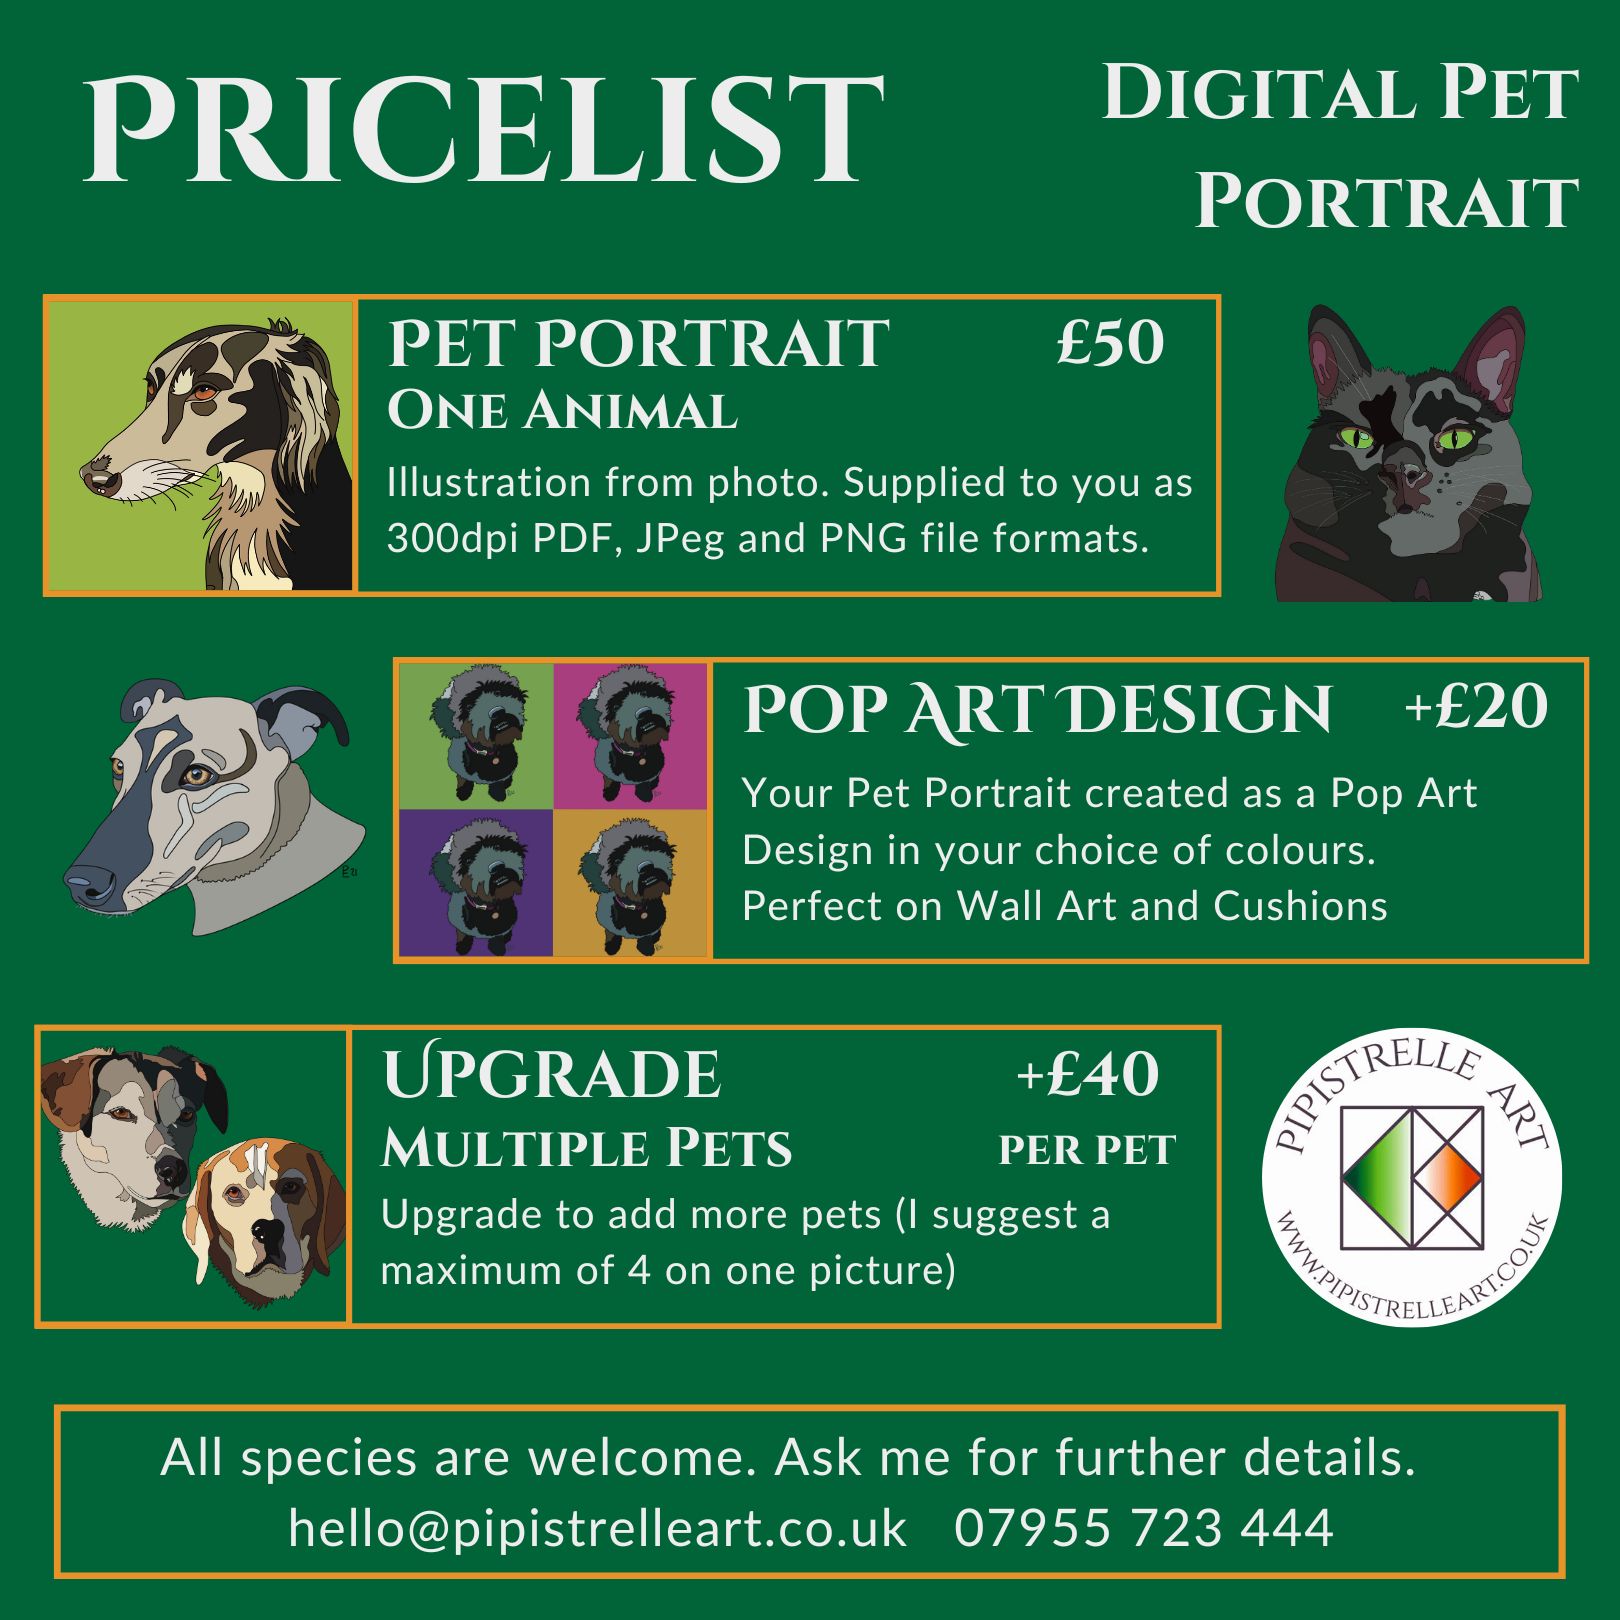 Price list for Digital Pet Portraits